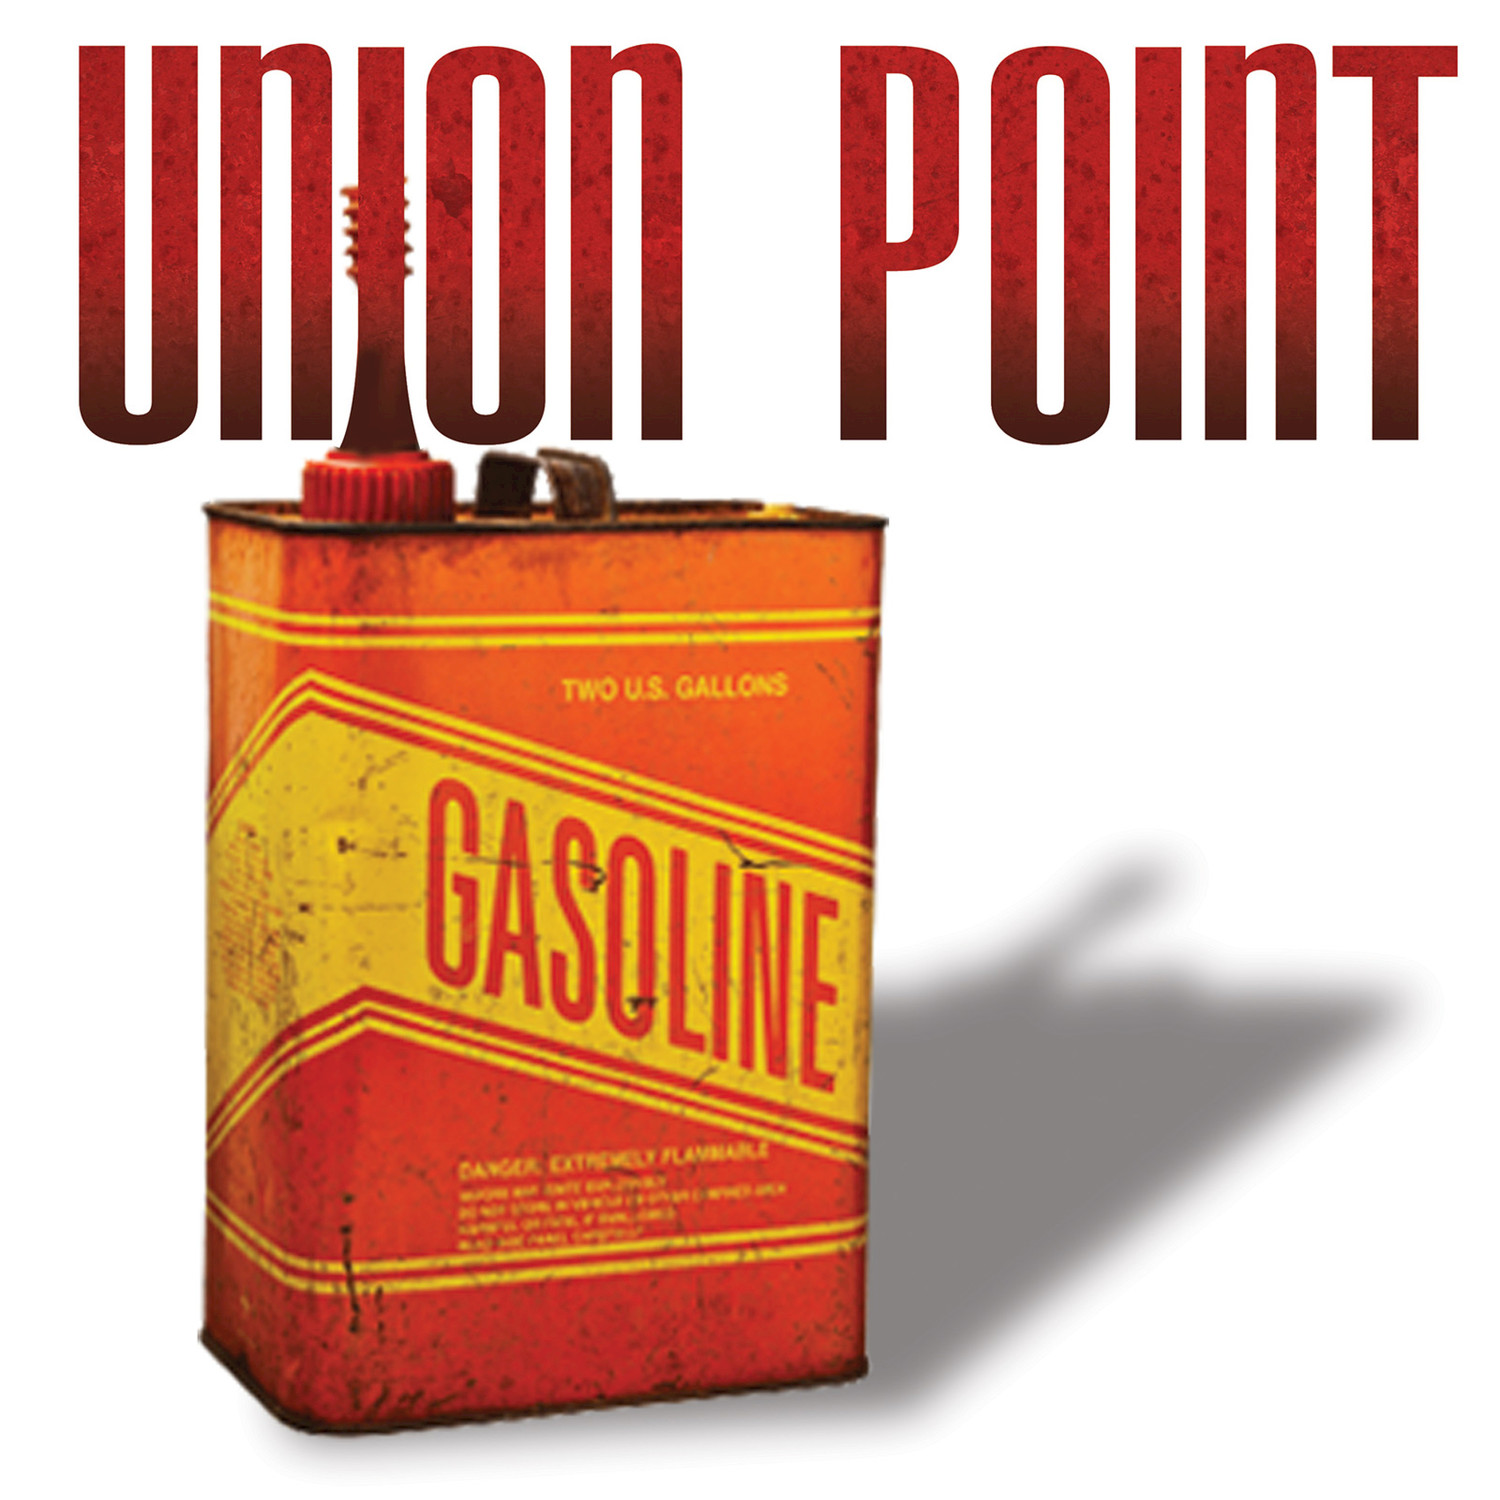 Union Point